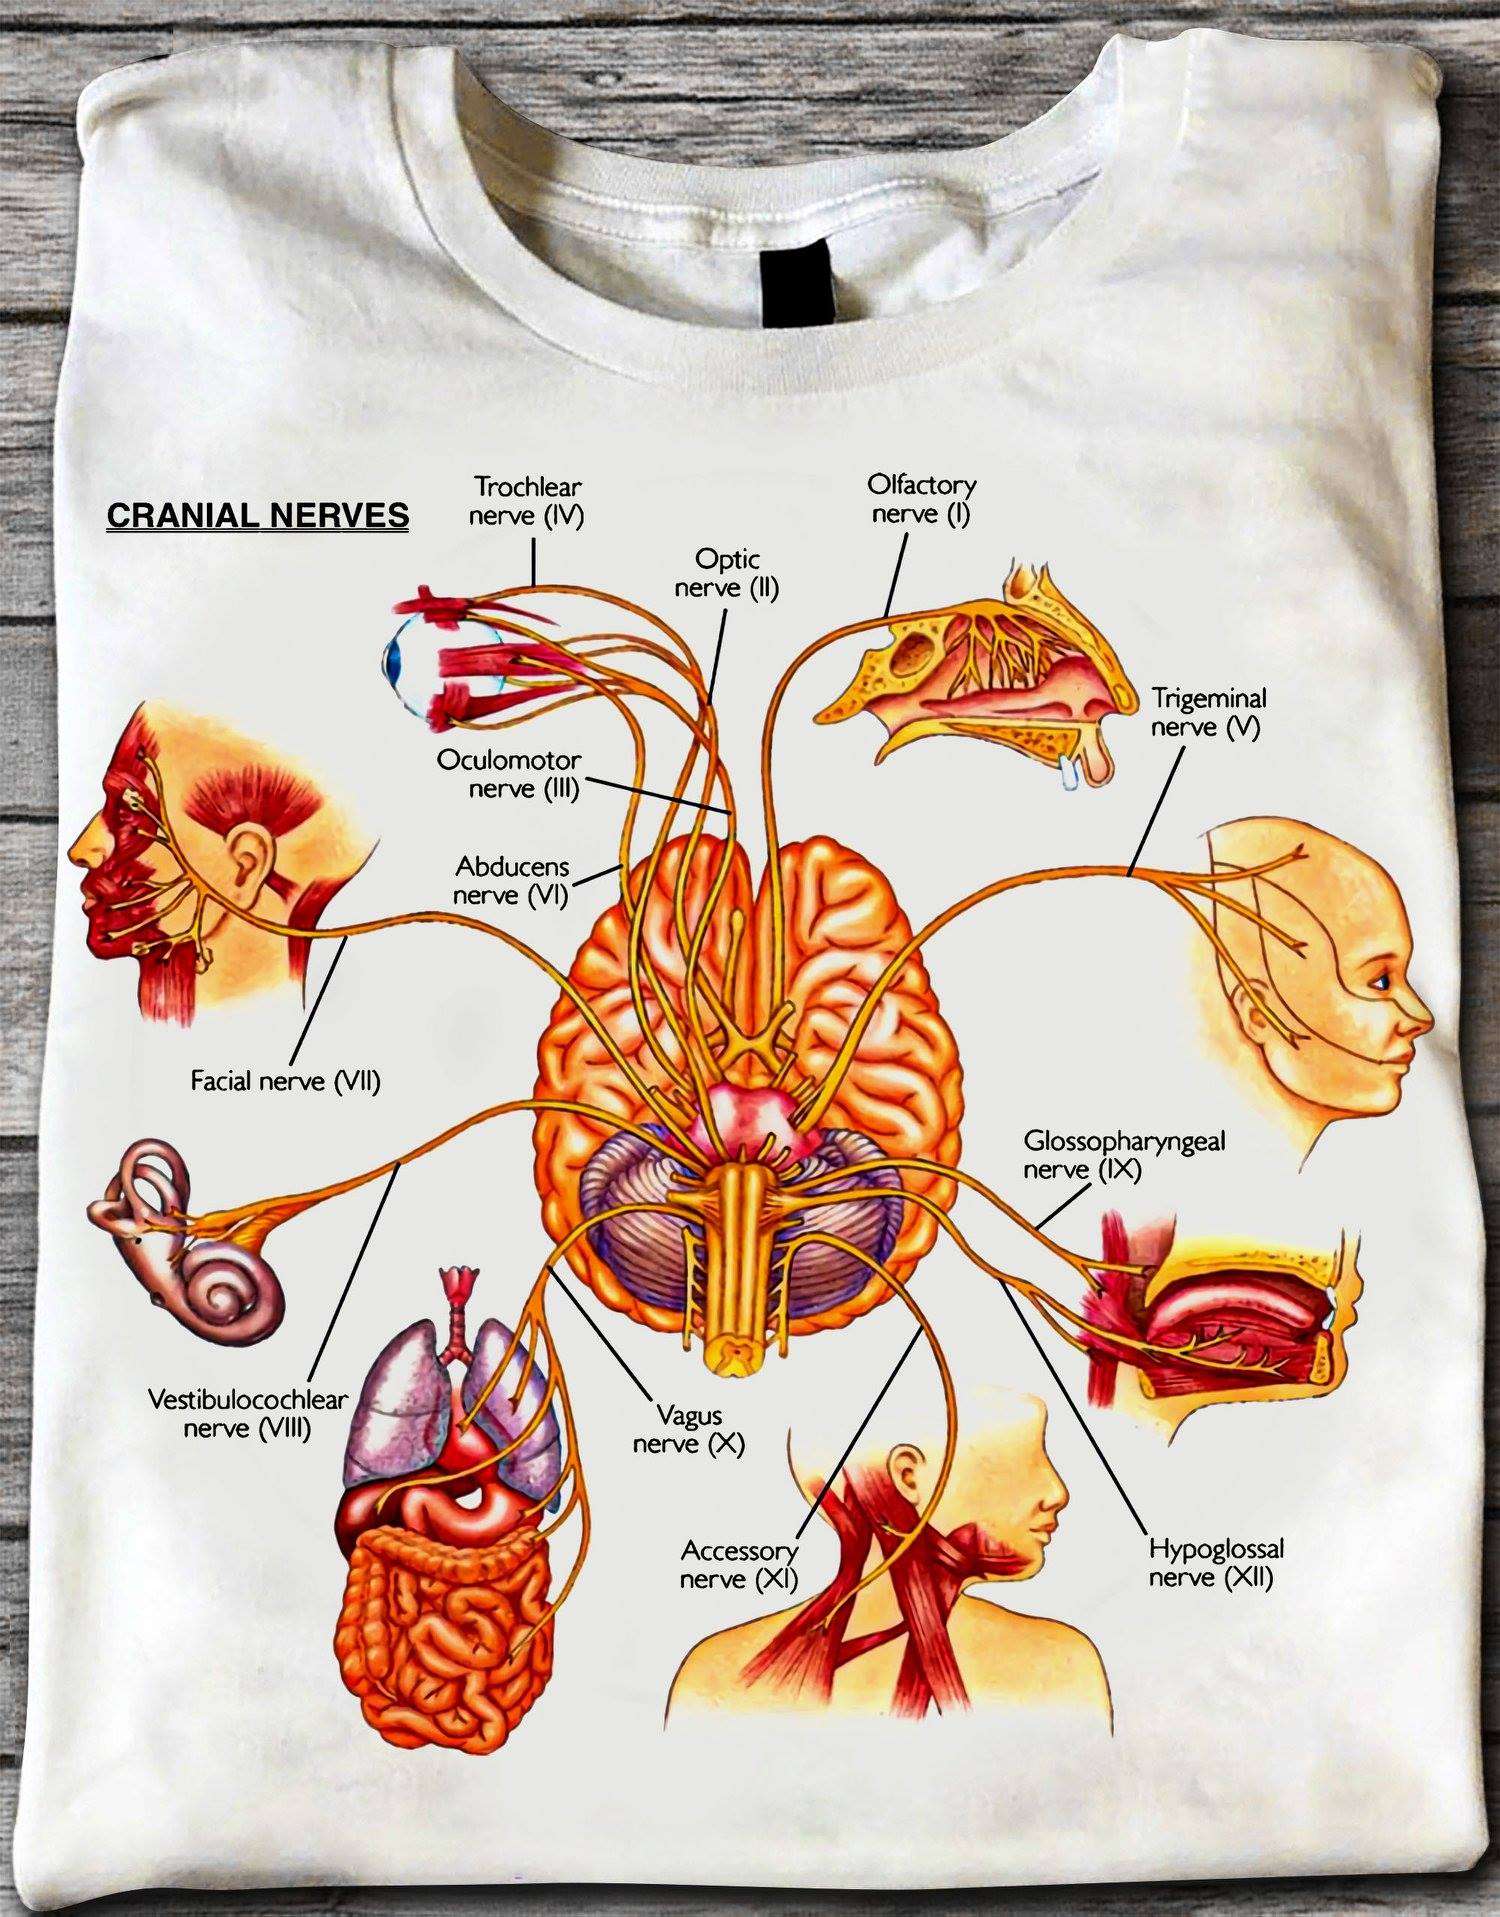 Cranial Nerves - Trochlear nerve, optic nerve, olfactory nerve, trigeminal nerve